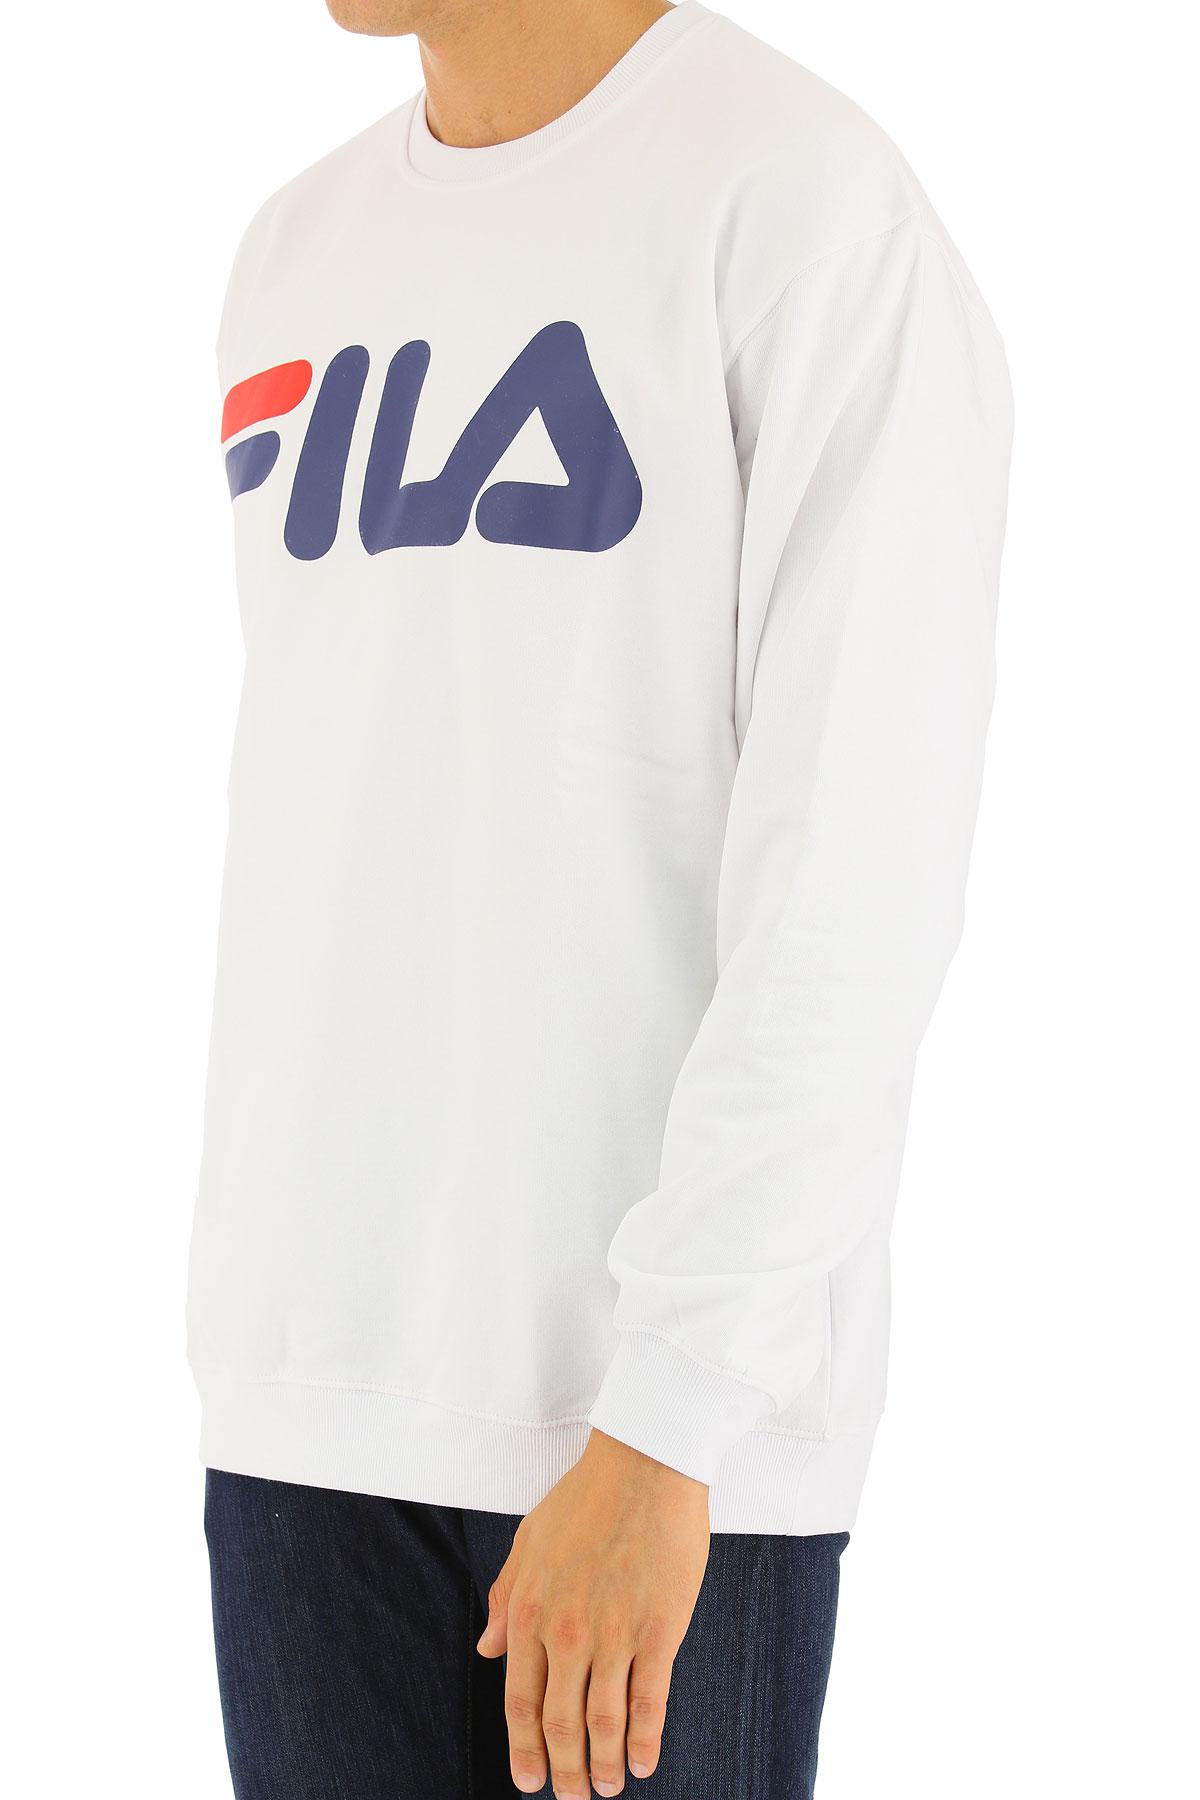 Fila Sweatshirt For Men On Sale in White for Men - Lyst